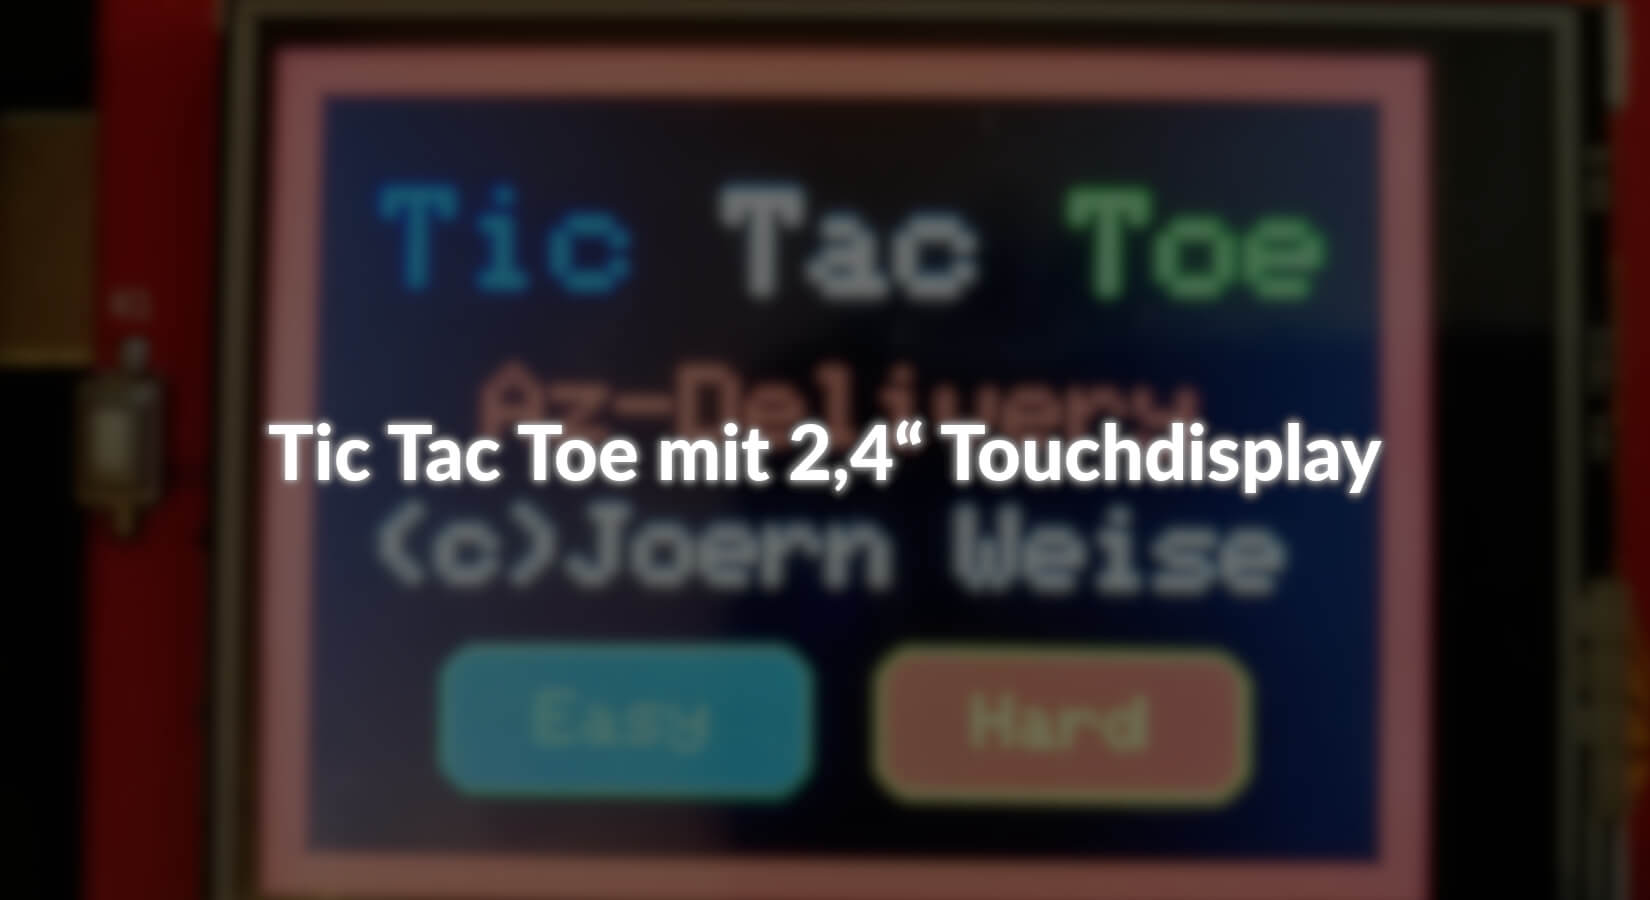 Tic Tac Toe mit 2,4“ Touchdisplay - AZ-Delivery